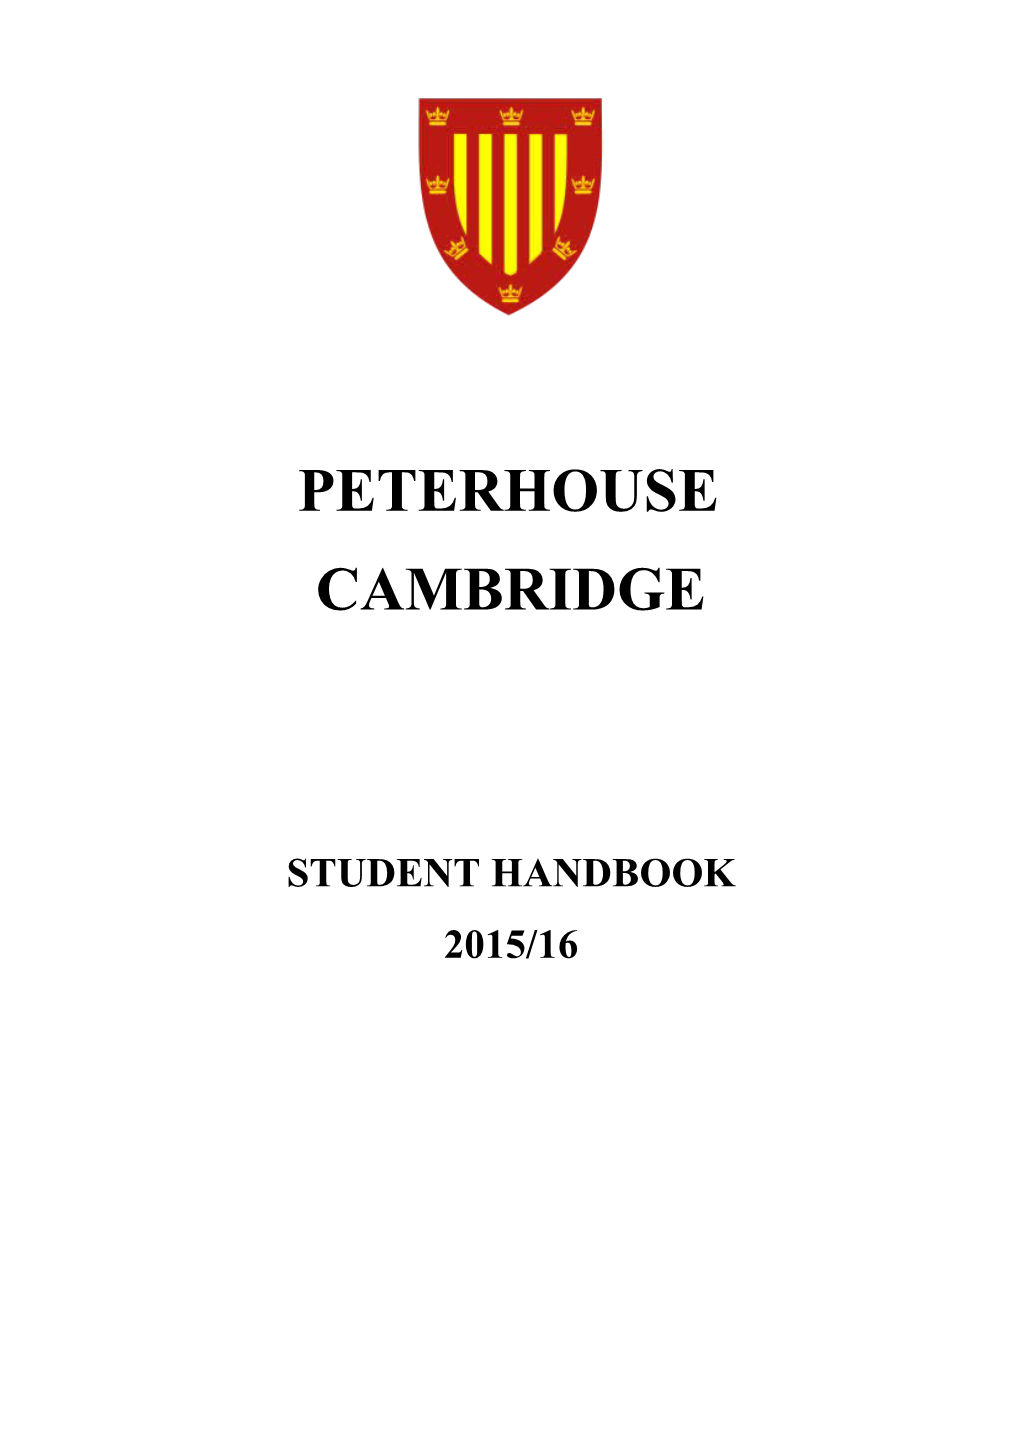 Student Handbook s6